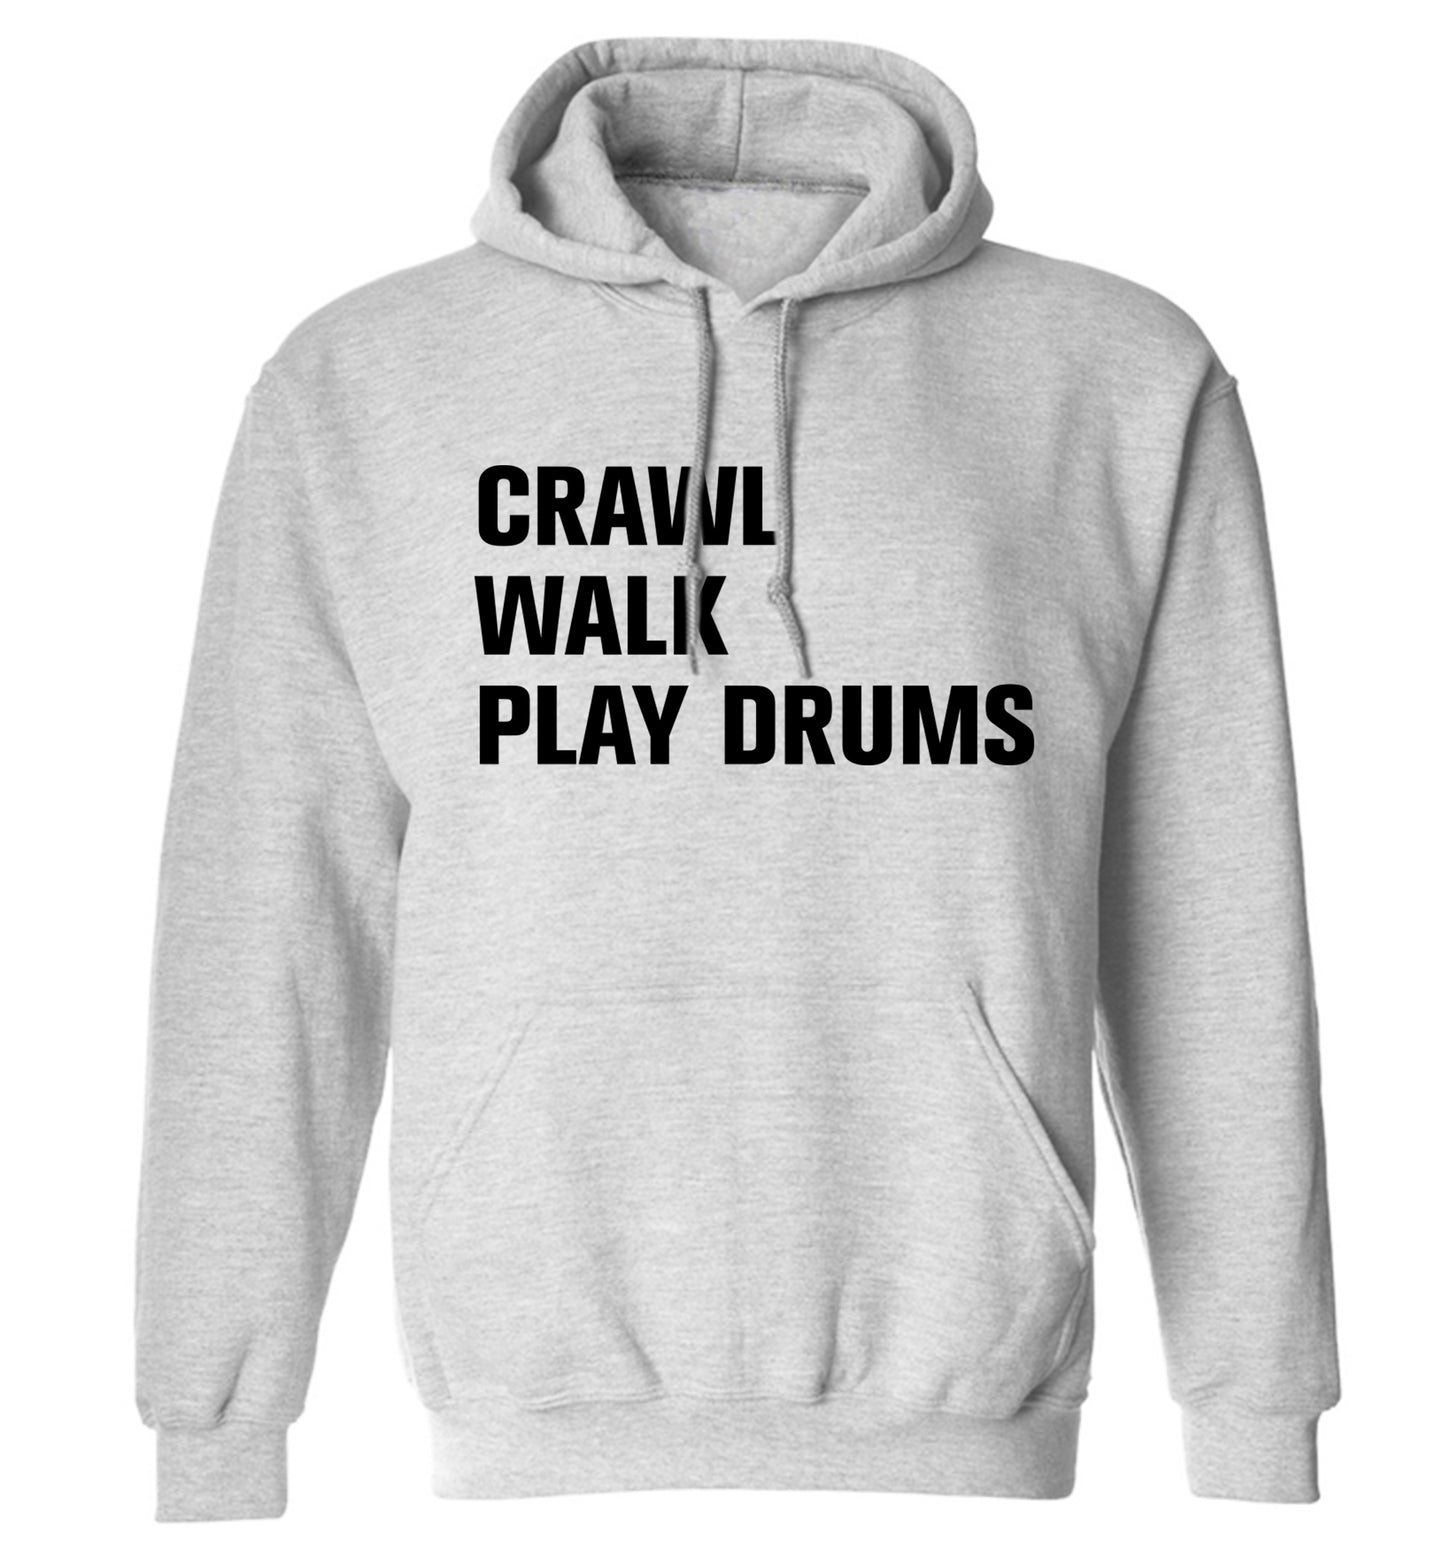 Crawl walk play drums adults unisex grey hoodie 2XL